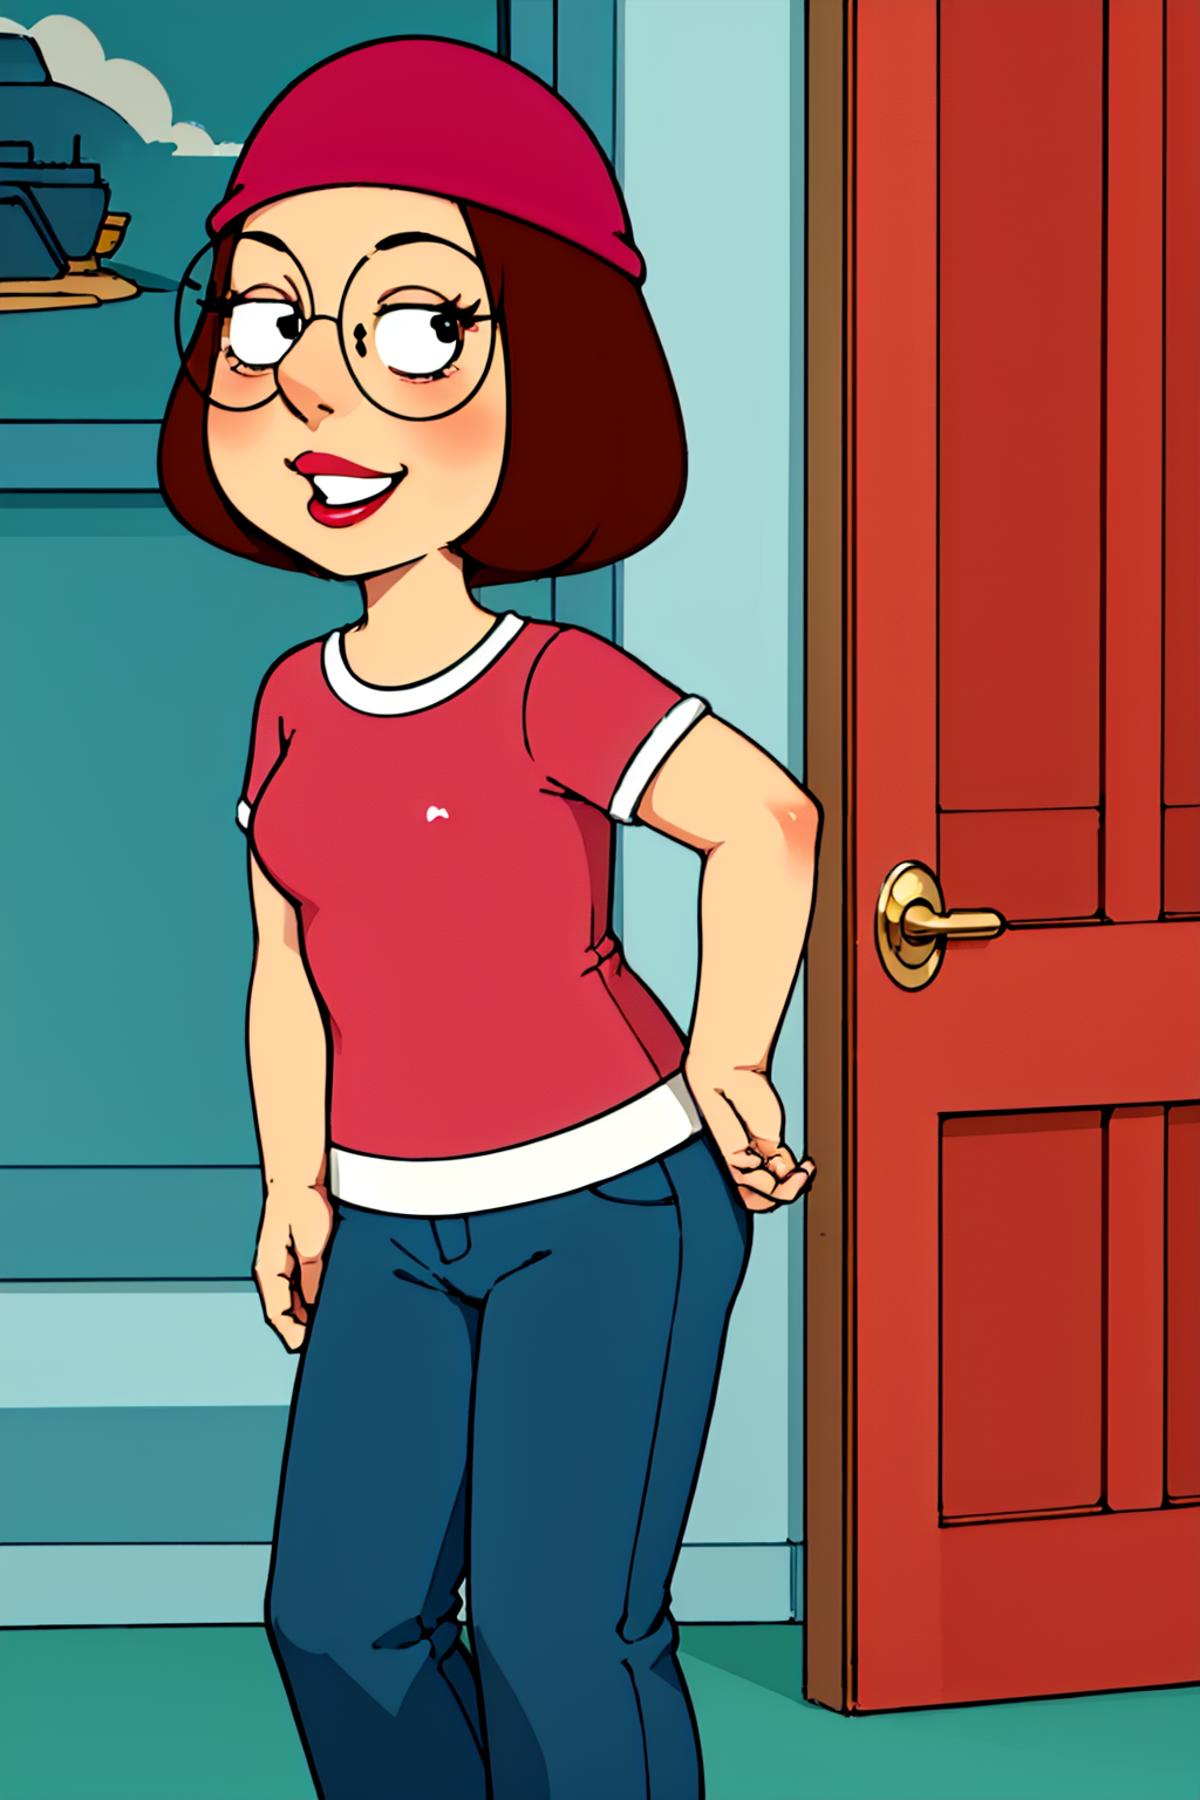 Meg Griffin (Familyguy) image by jlfo